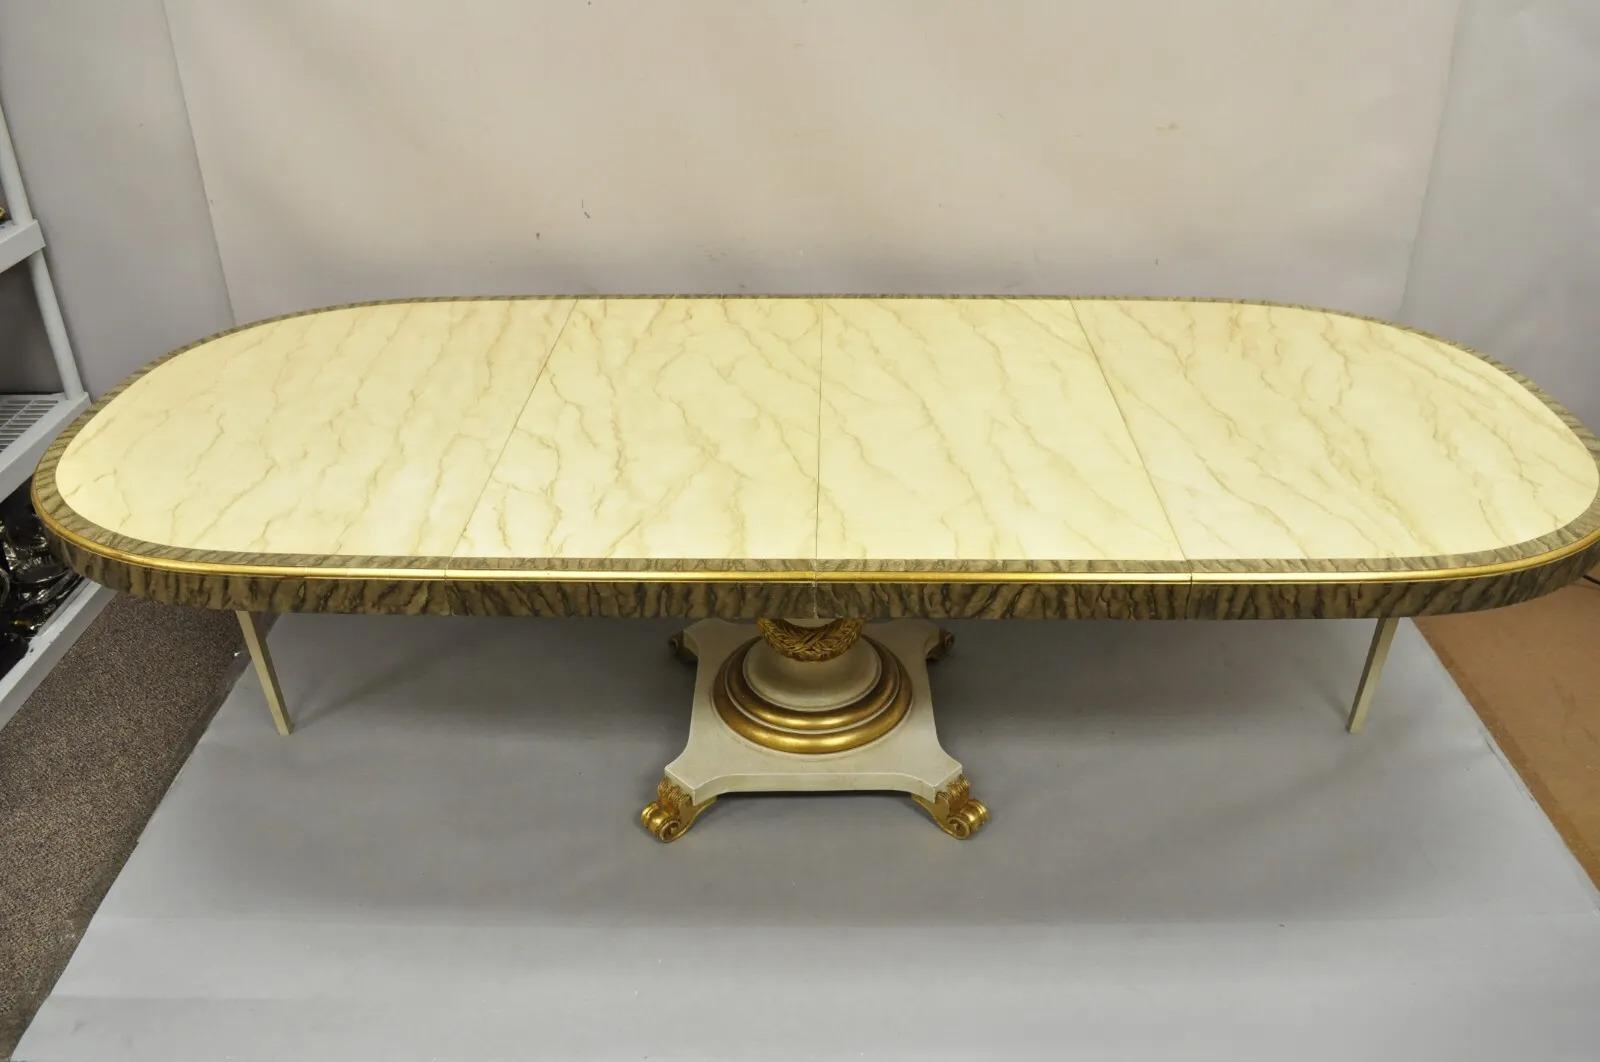 Italian Regency Cream & Gold Gilt Lacquered Urn Pedestal Dining Table - 3 Leaves For Sale 7